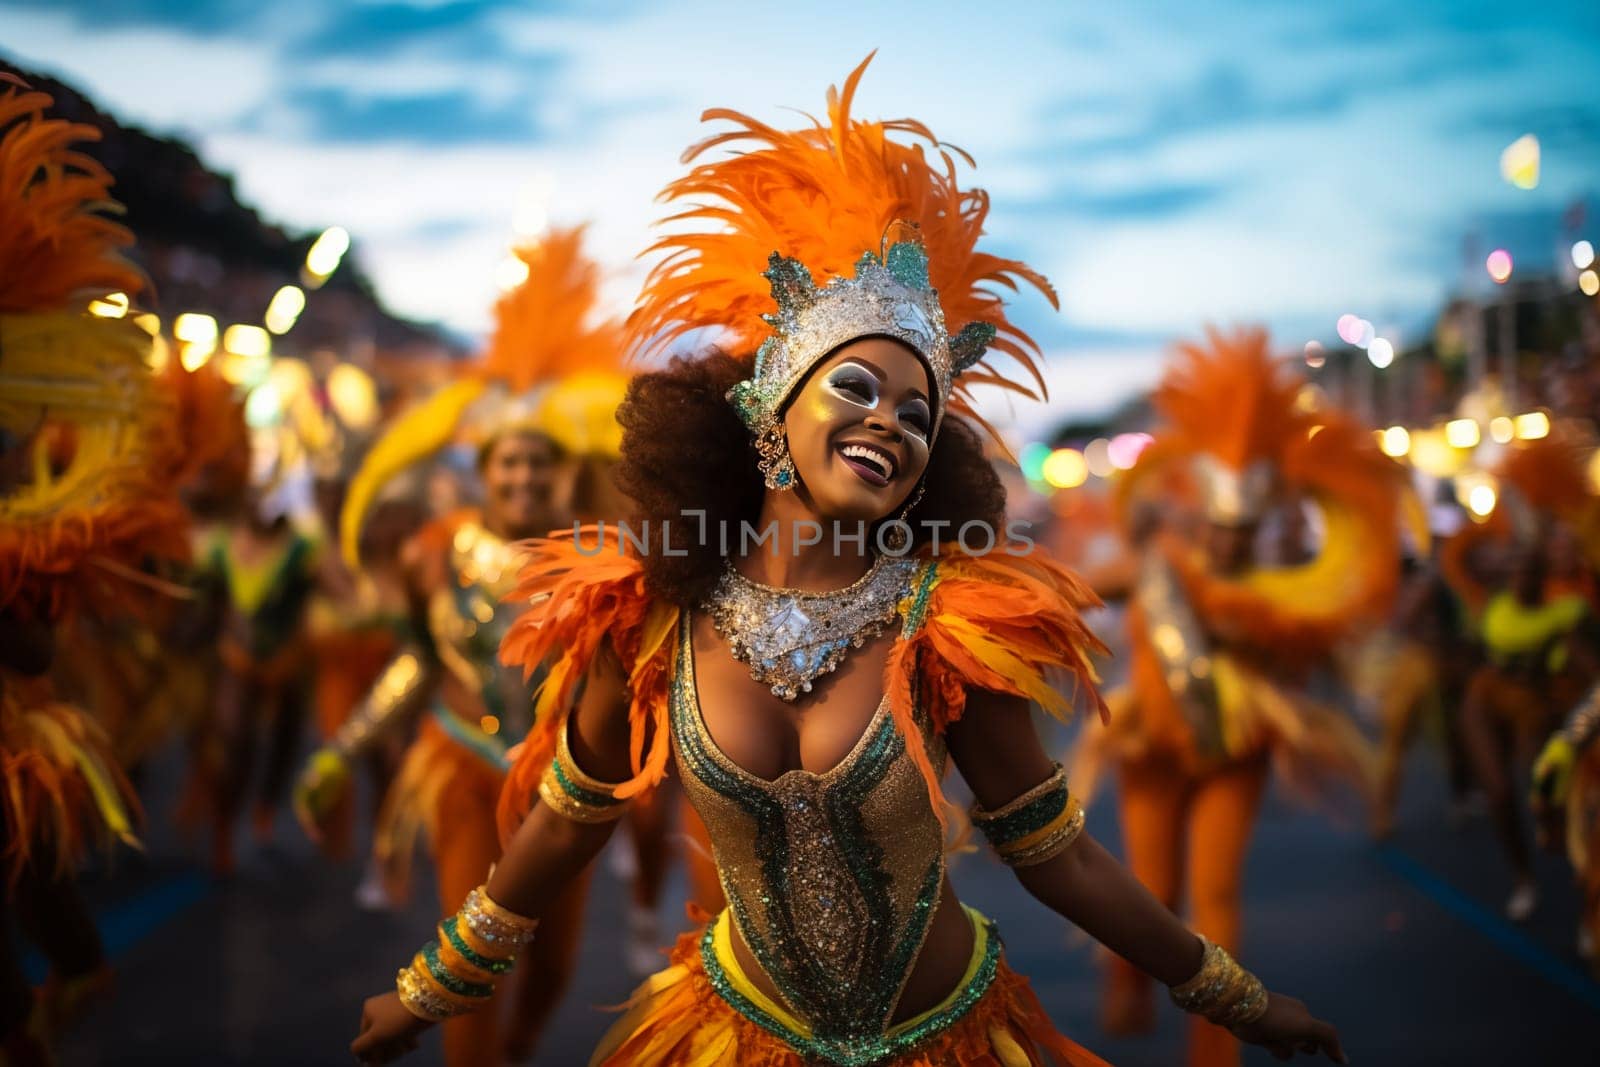 Rio Carnival Dancer in Vibrant Costume by dimol